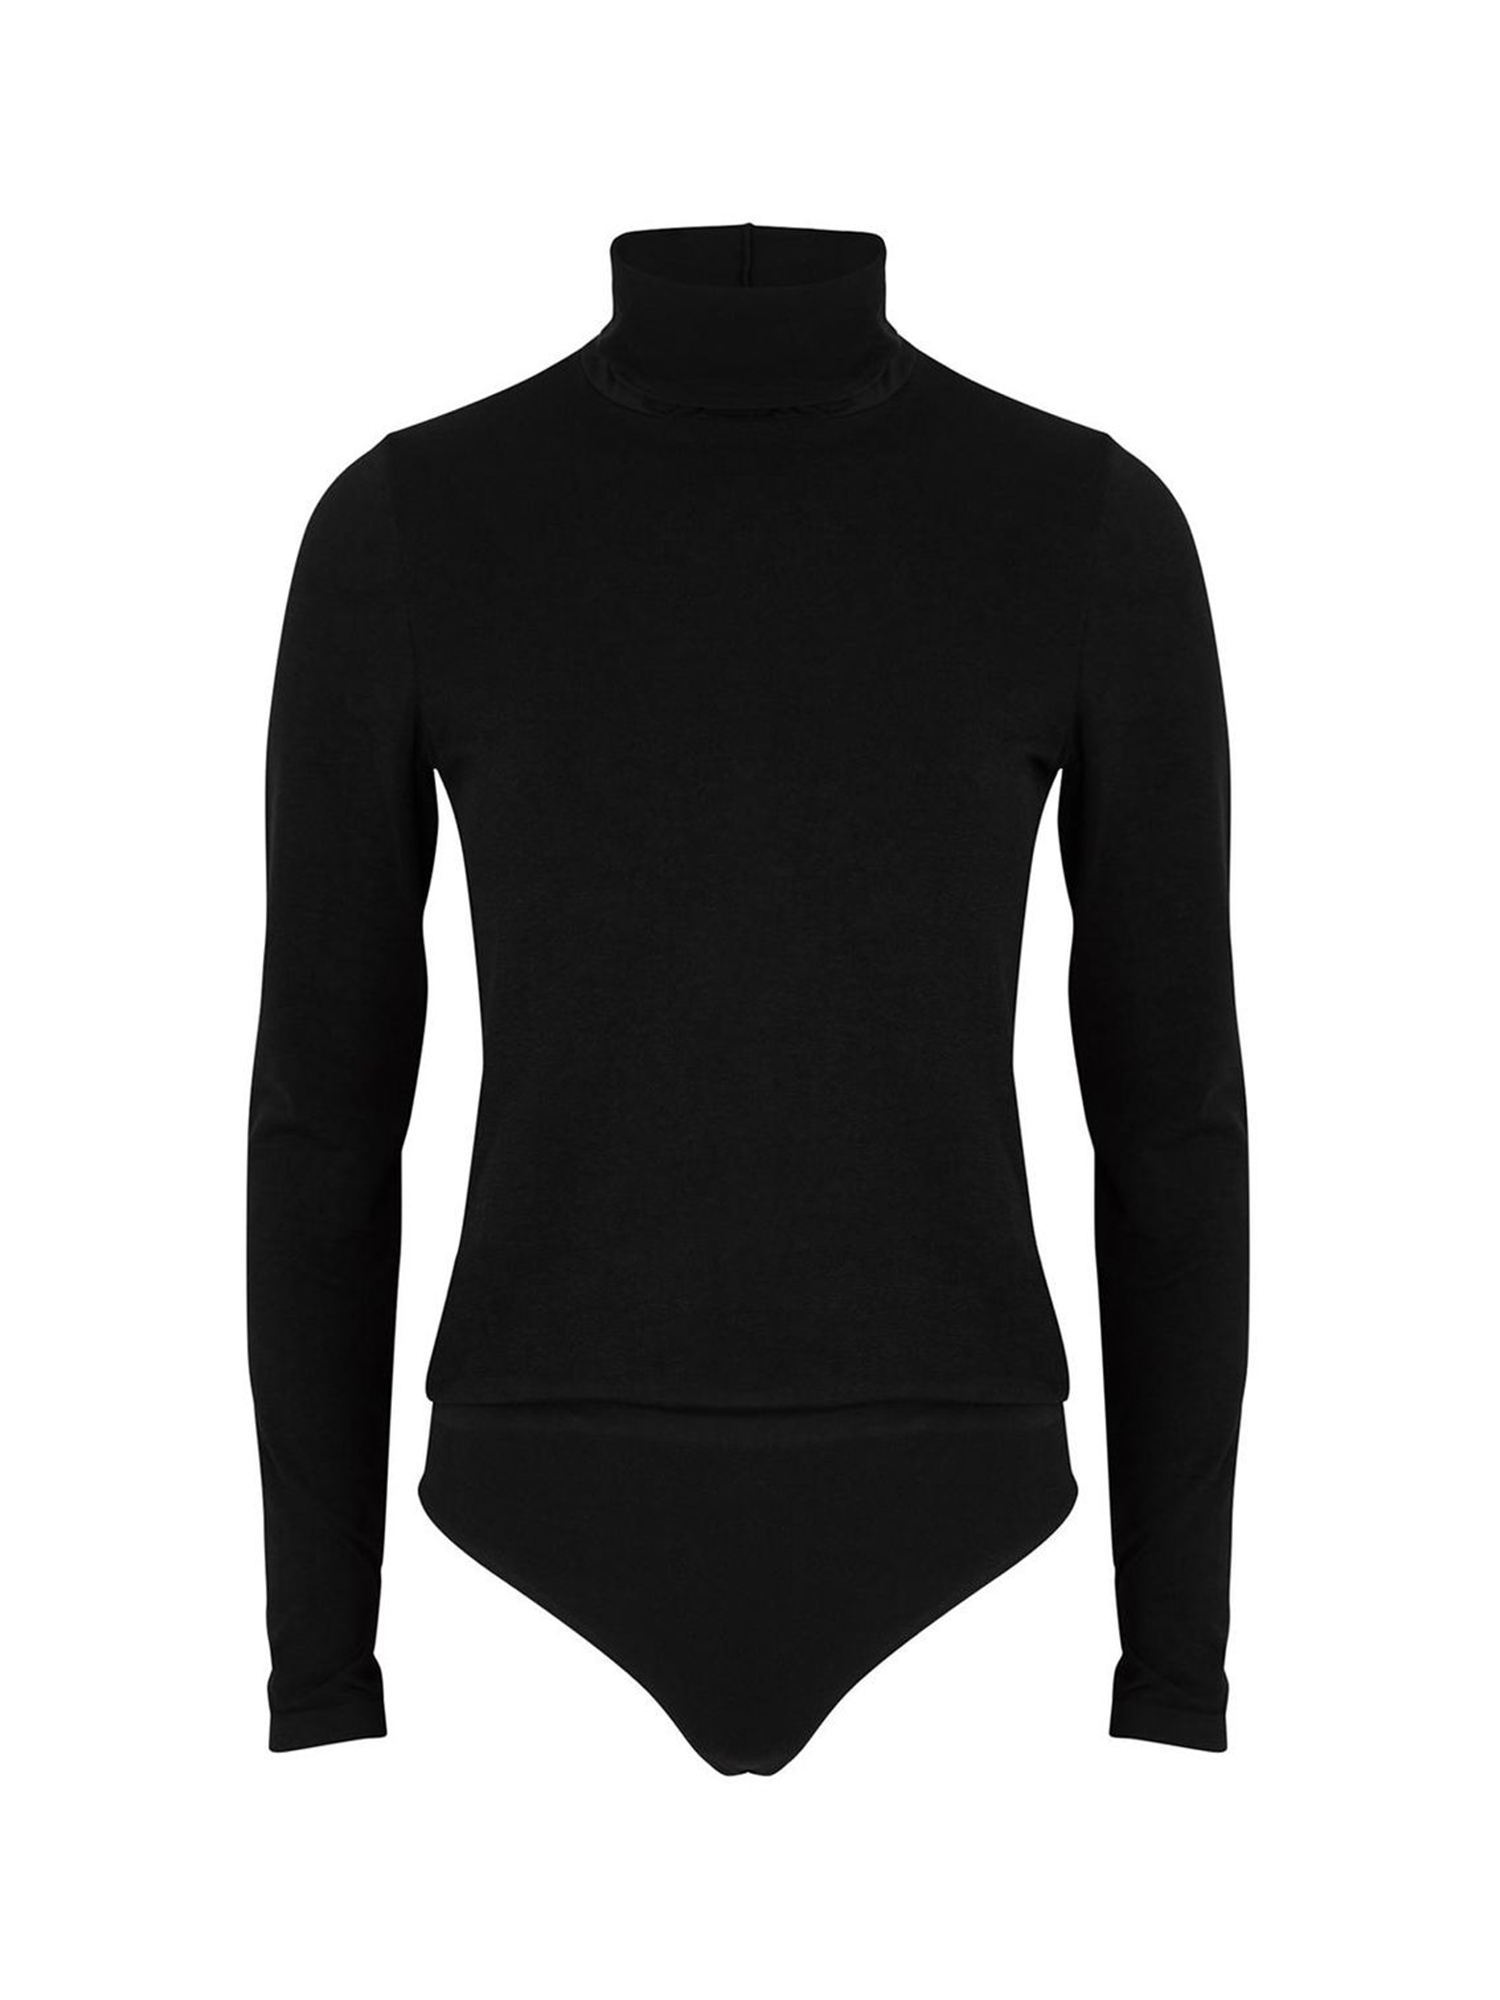 Wolford Tan Colorado String Bodysuit in Black